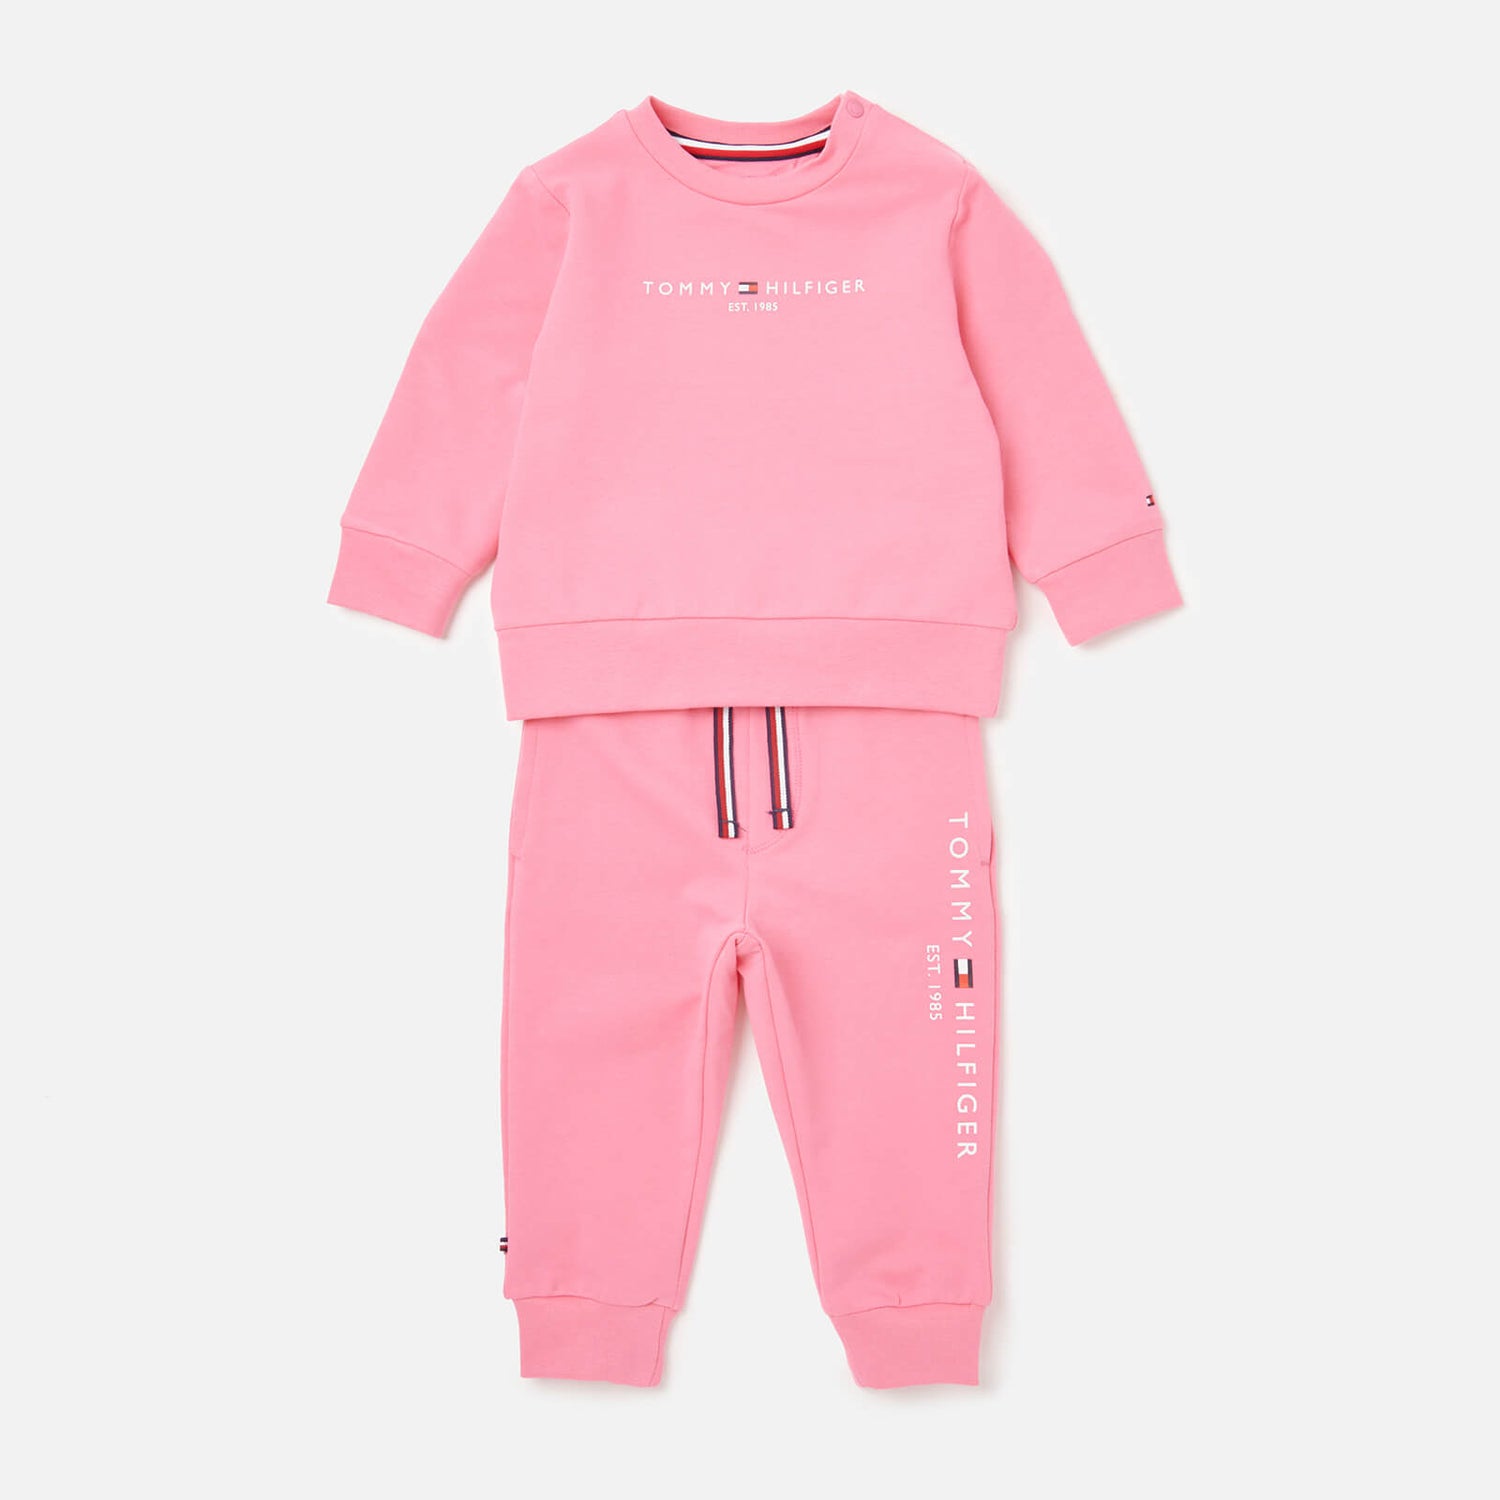 Tommy Hilfiger Baby Essential Set - Pink